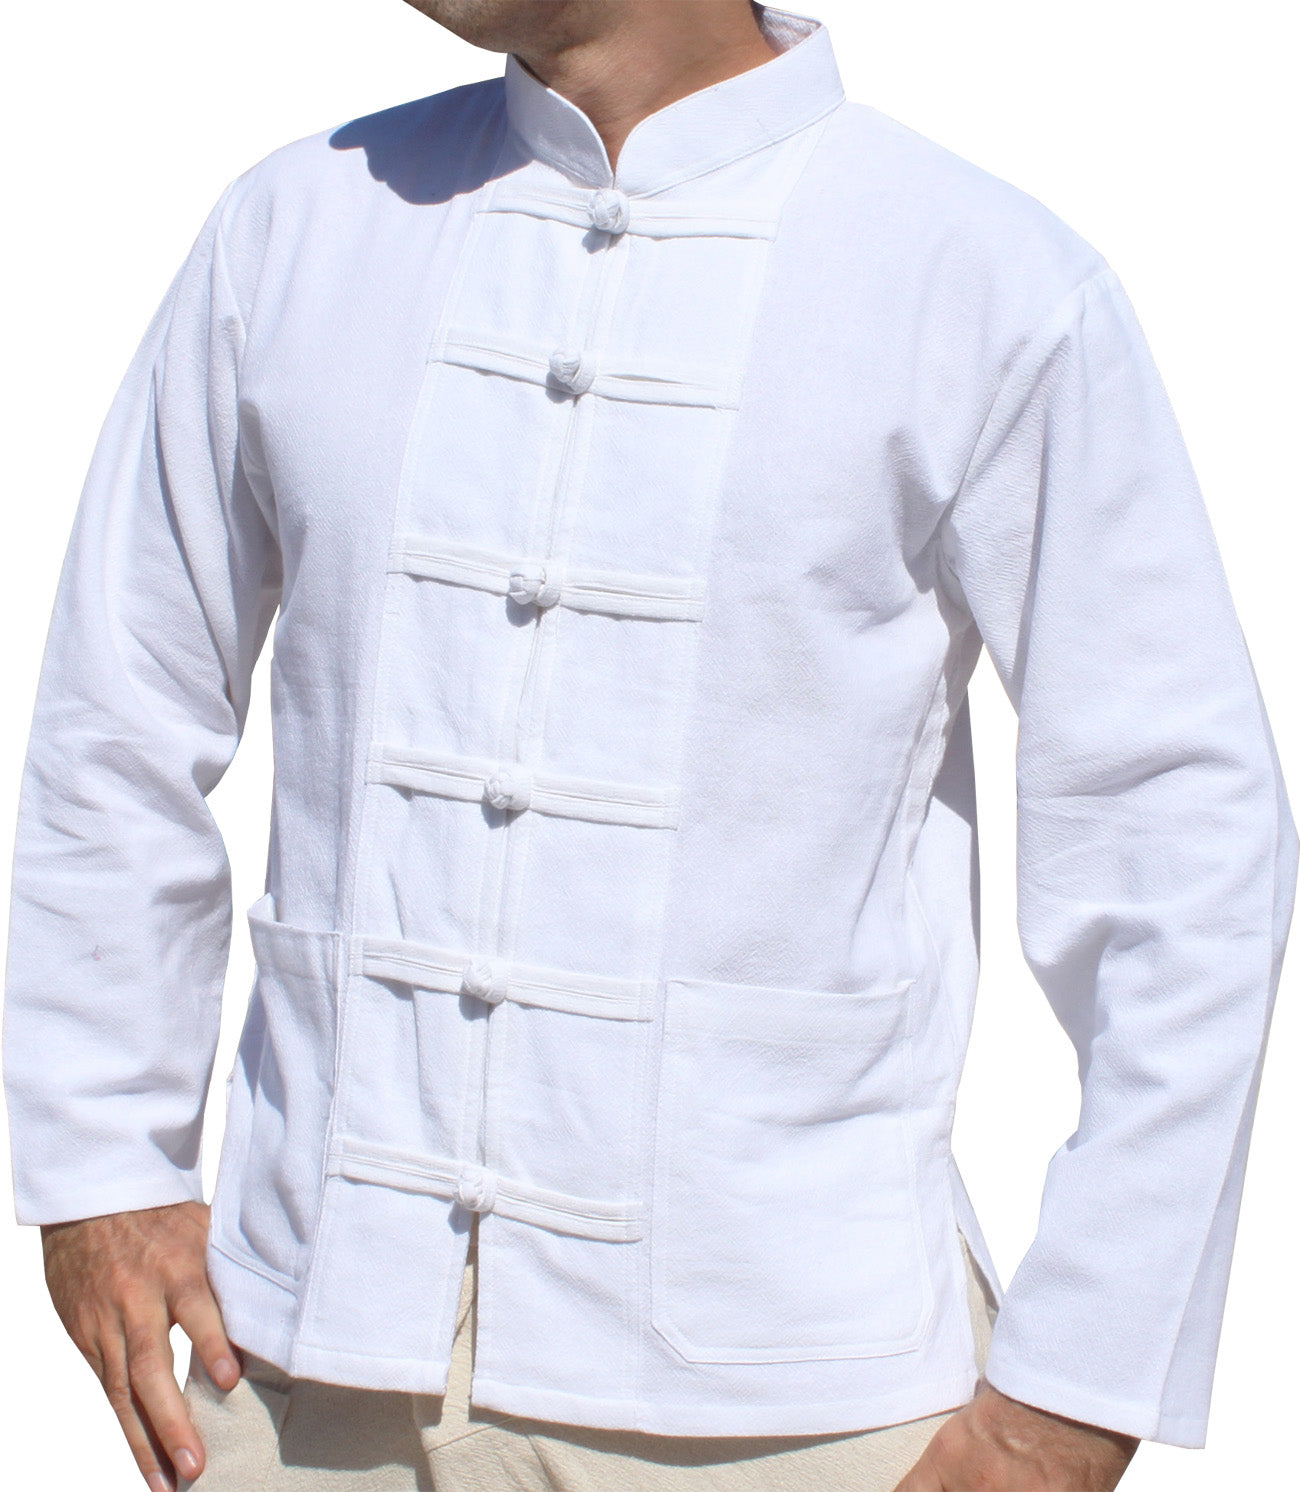 RaanPahMuang Thick Muang Cotton Chinese Jacket Shirt Mandarin Frog Button Front